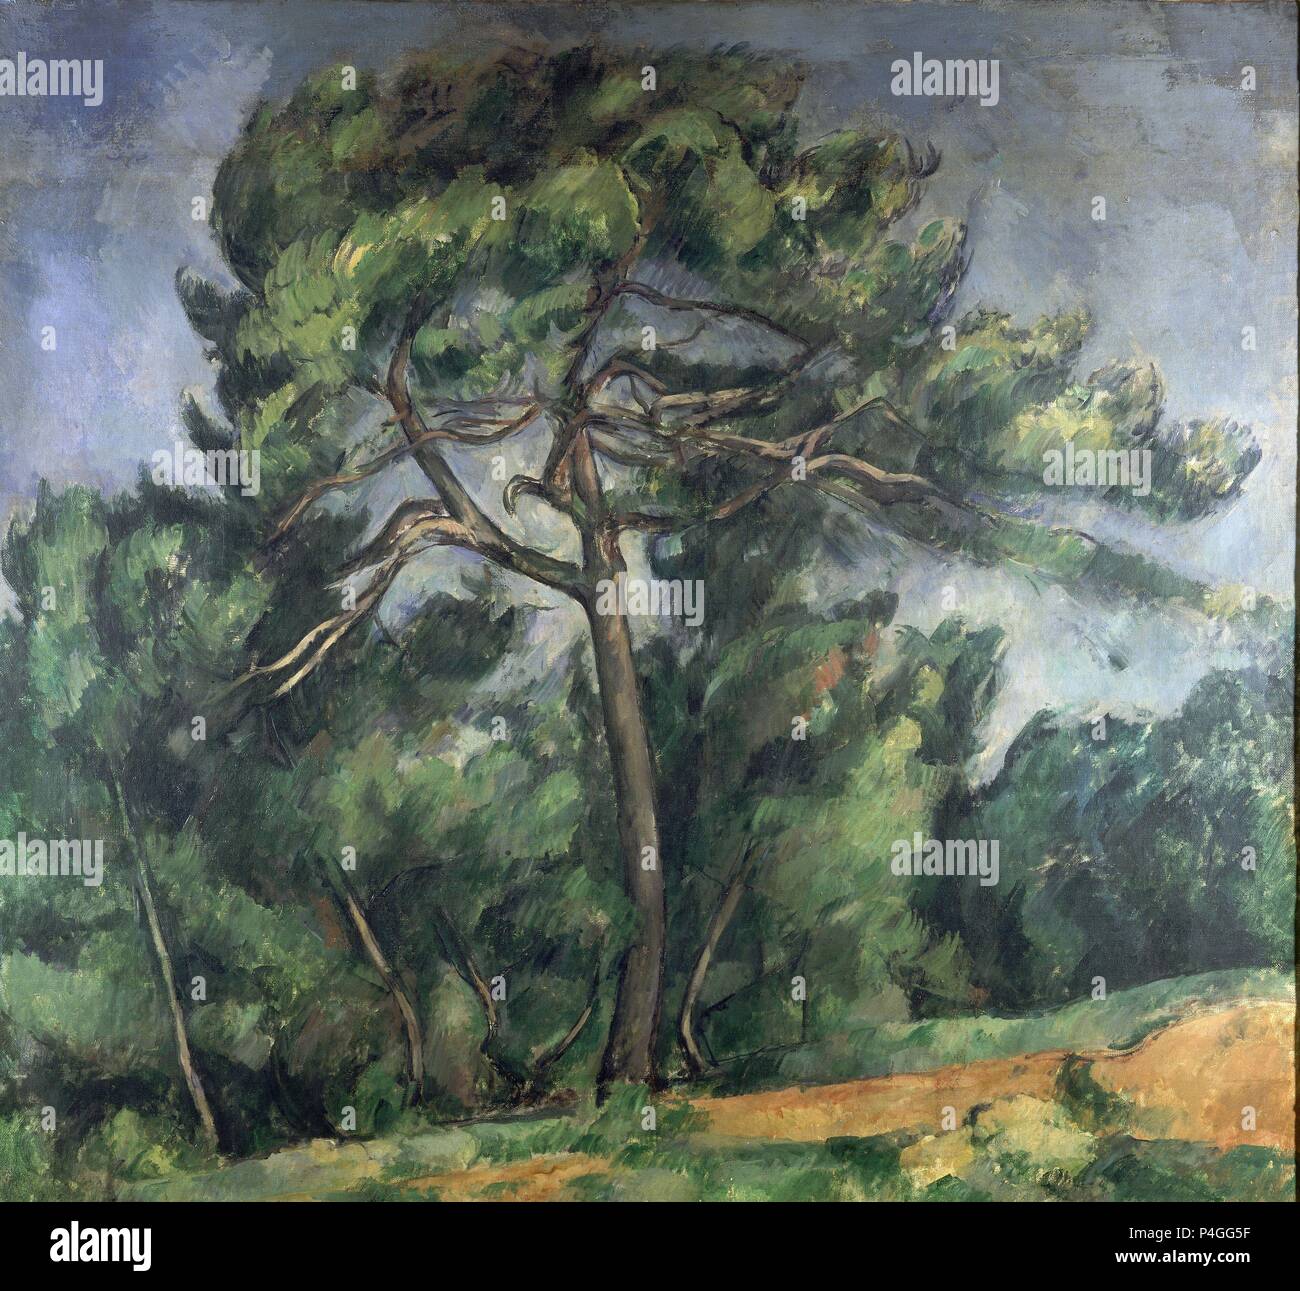 'The Great Pine', 1892-1896, Oil on canvas, 89 x 70 cm. Author: Paul Cézanne (1839-1906). Location: MUSEO DE ARTE DE SAO PAULO ASSIS CHATEAUBRIAND, SAO PAULO, BRASILIEN. Stock Photo